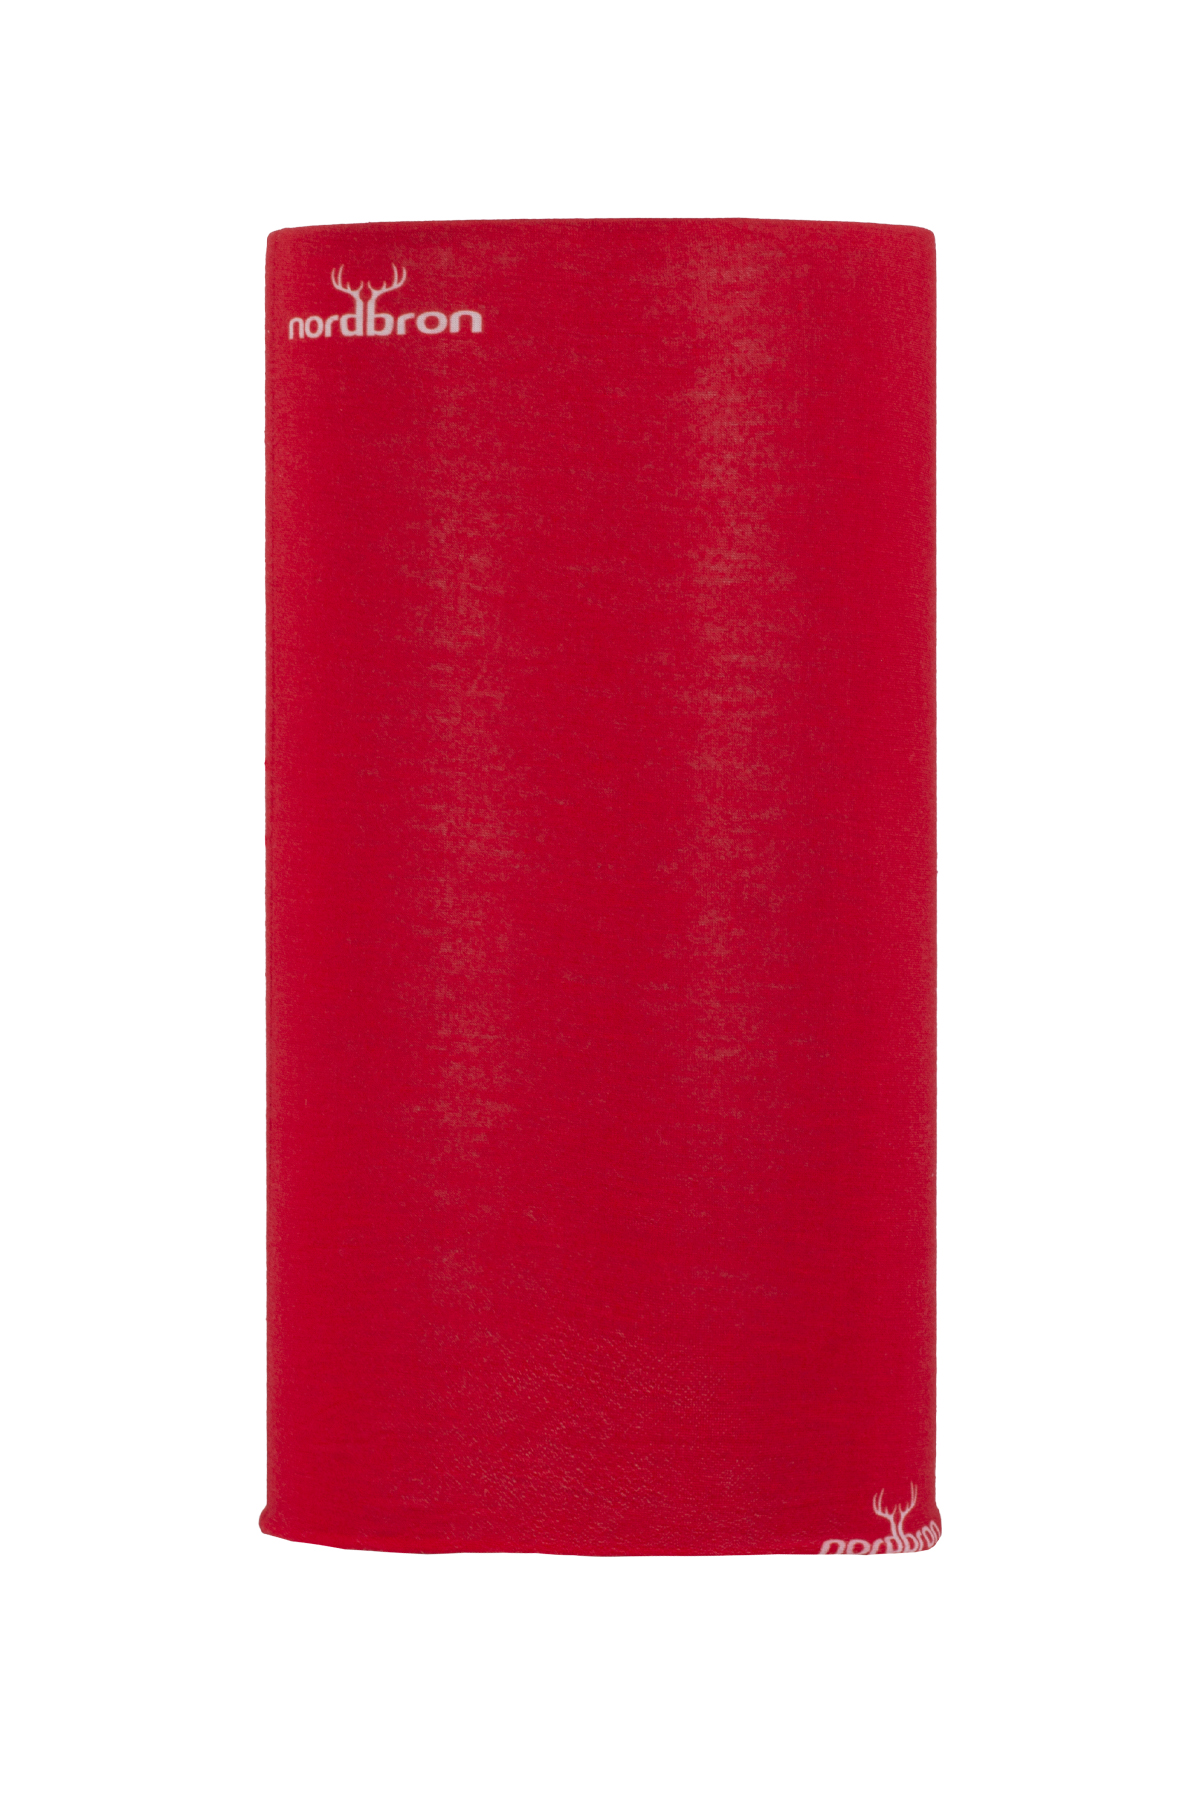 Nordbron Uni Solid Çok Fonksiyonlu Kırmızı Bandana